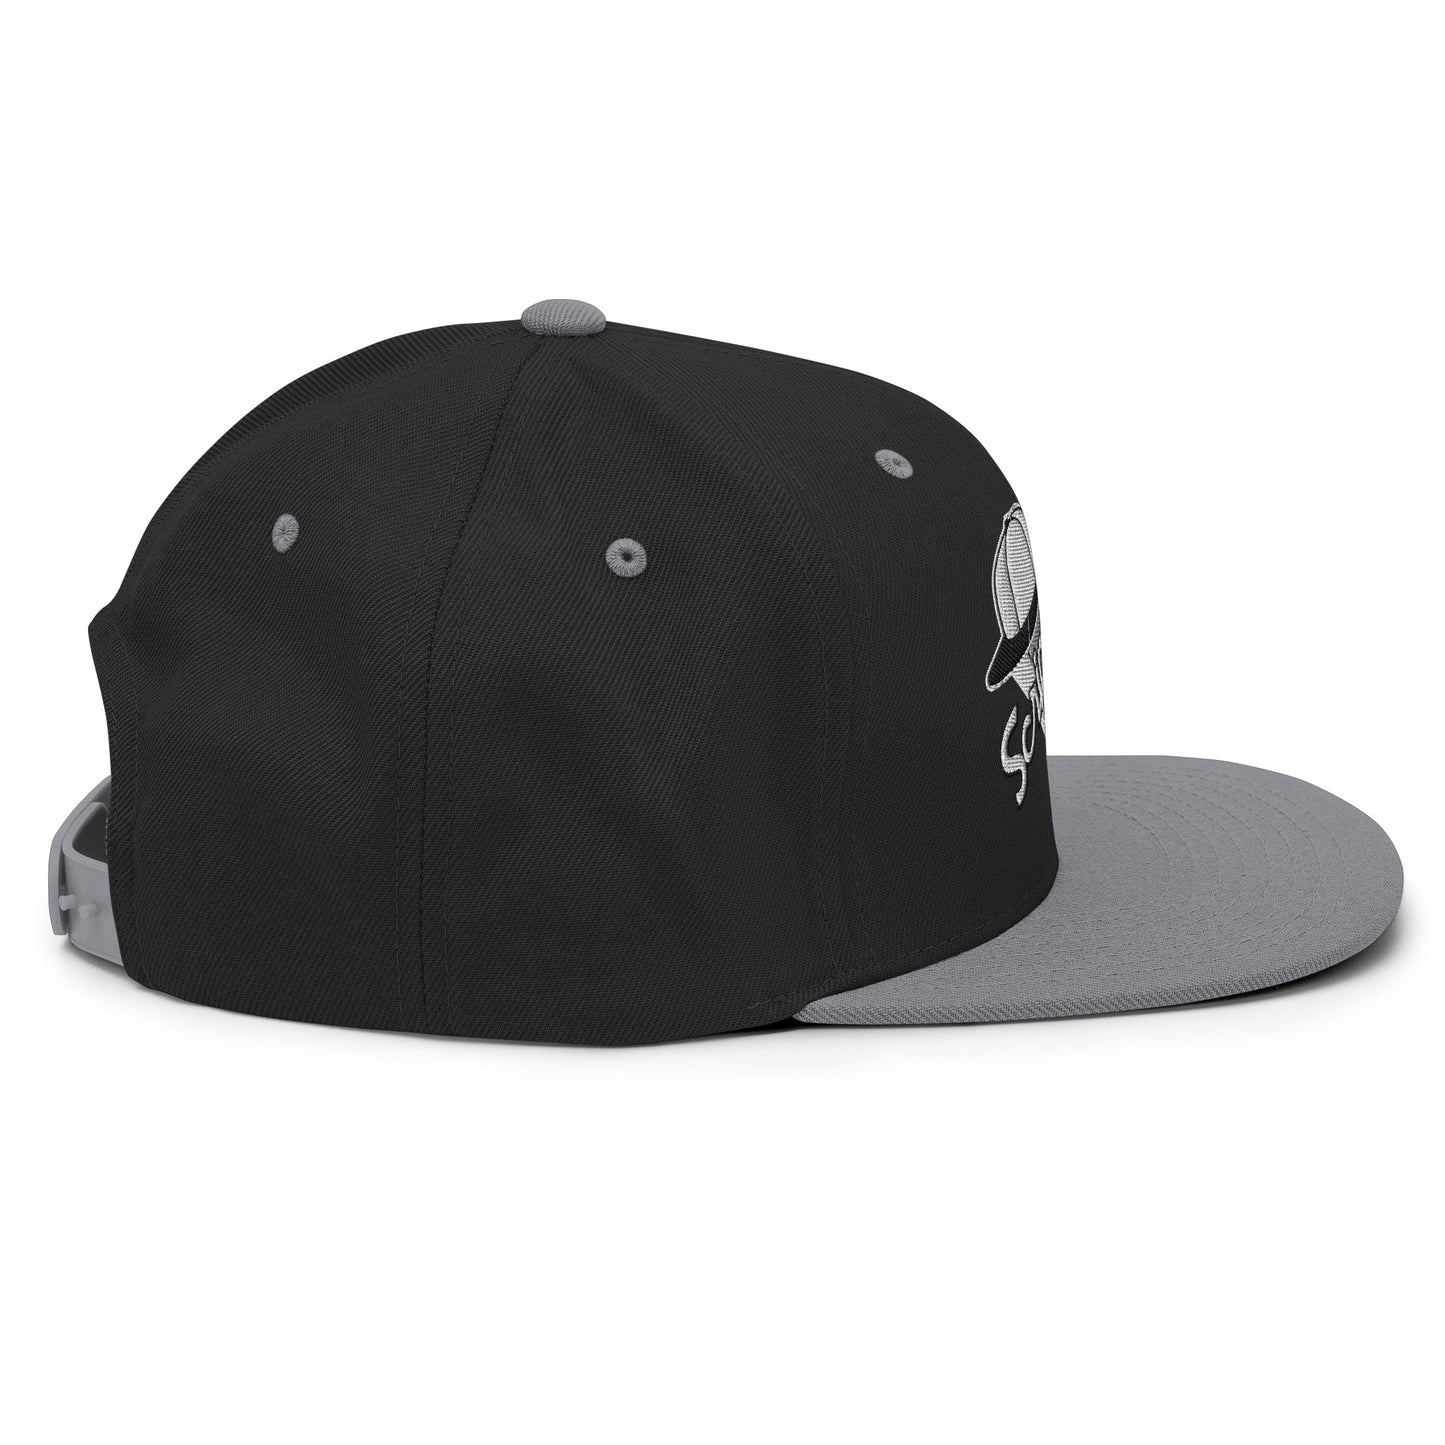 Script Hats 90's Sports Triangle Snapback Hat Black Silver